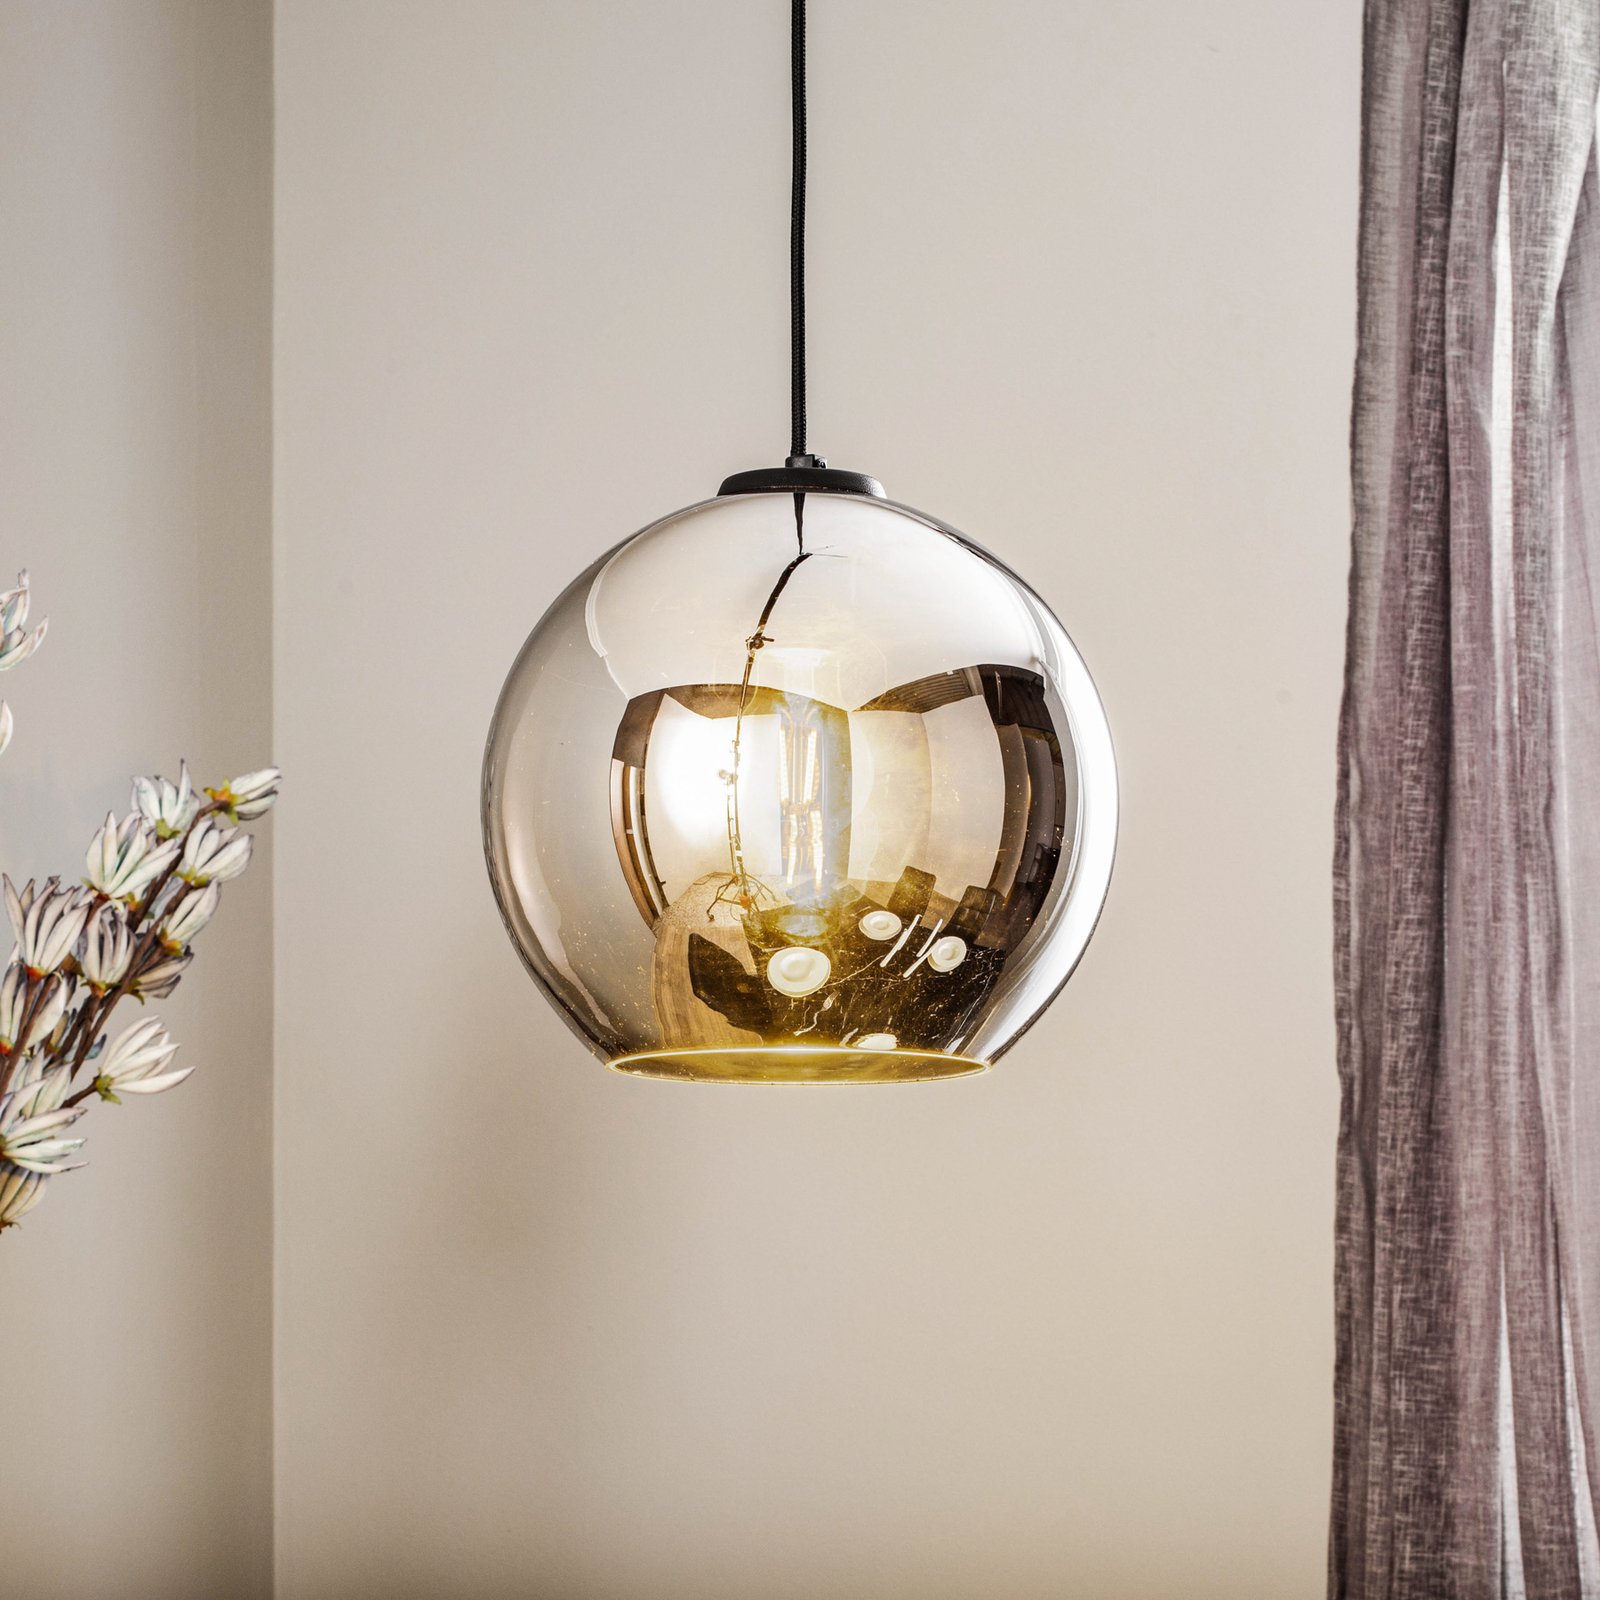 Polaris hanglamp, spiegelglas, chroom